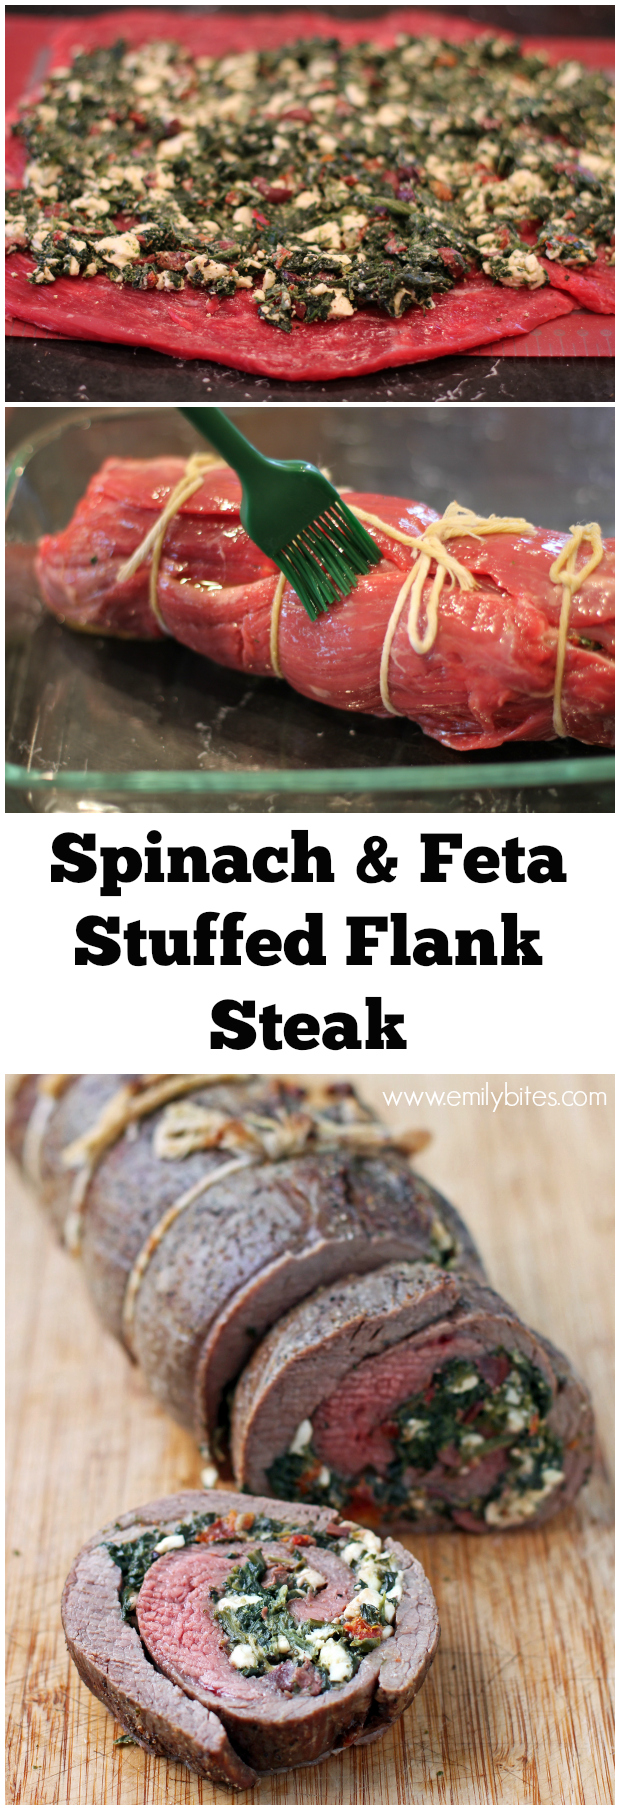 Spinach and Feta Stuffed Flank Steak